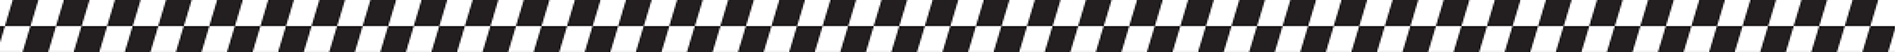 racing checkered stripe